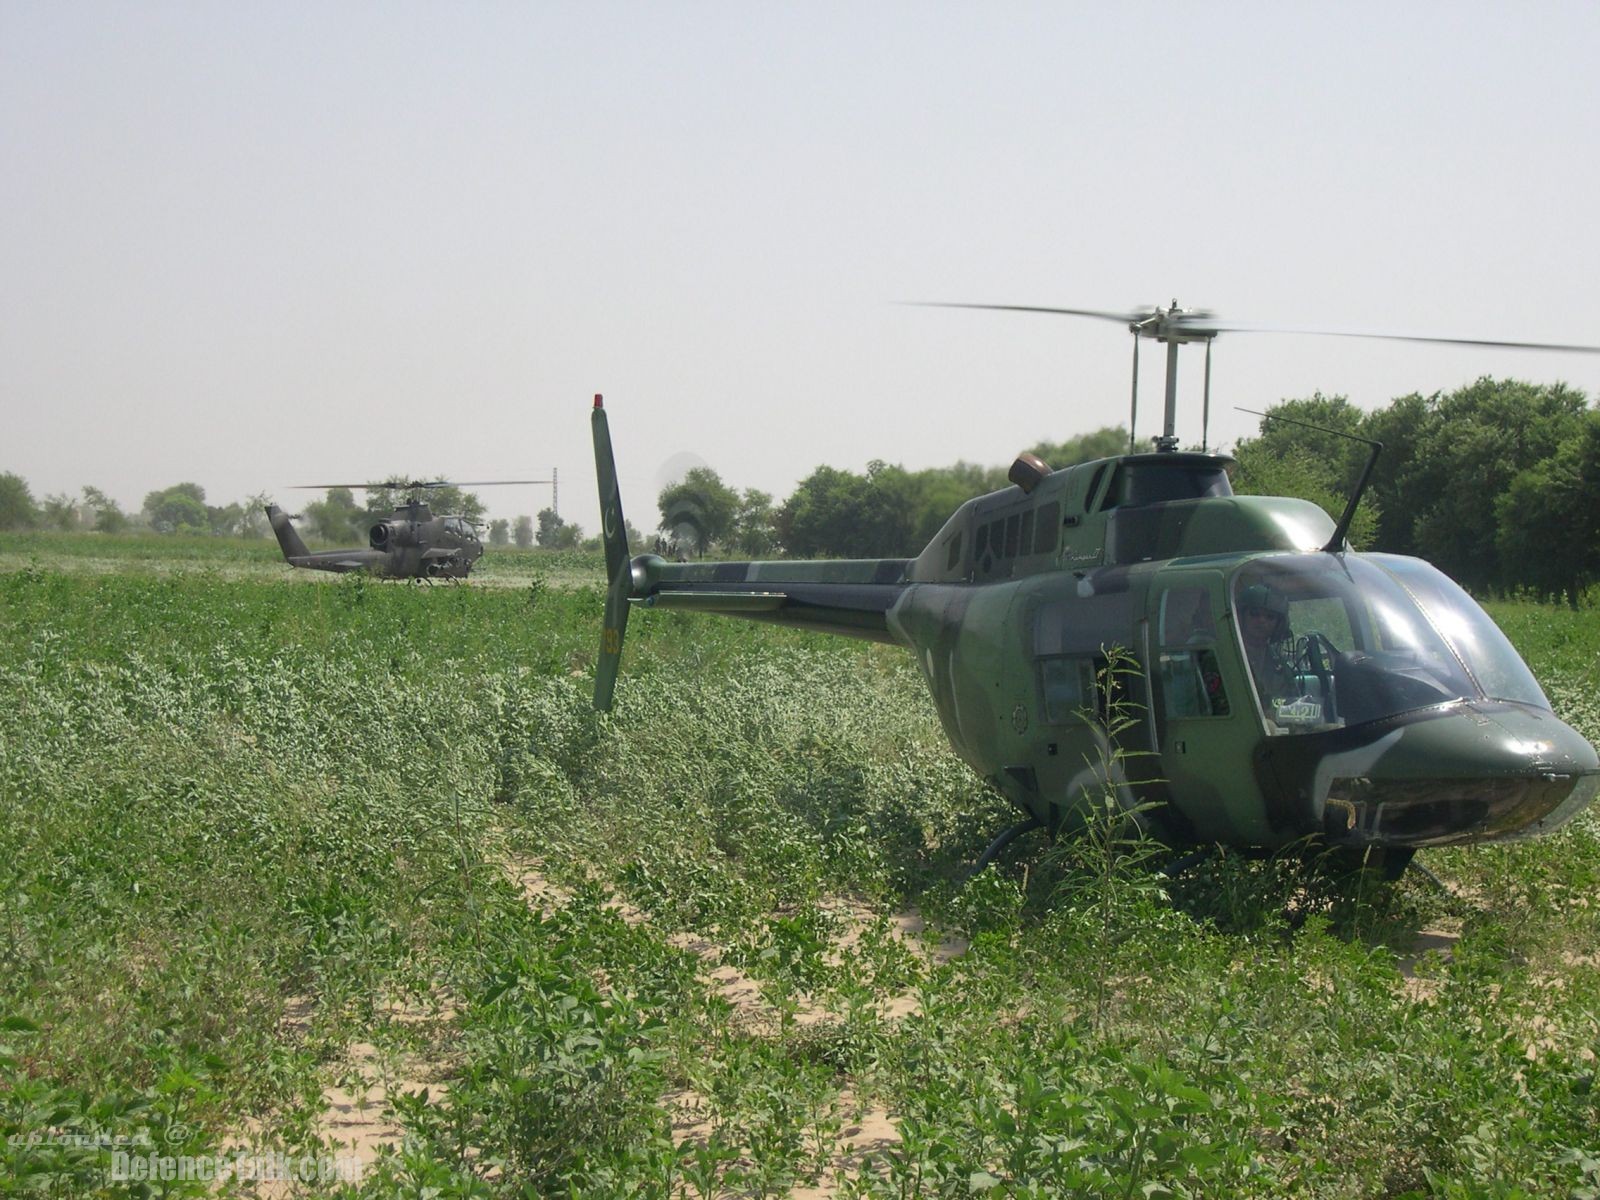 AH-1S and jetranger